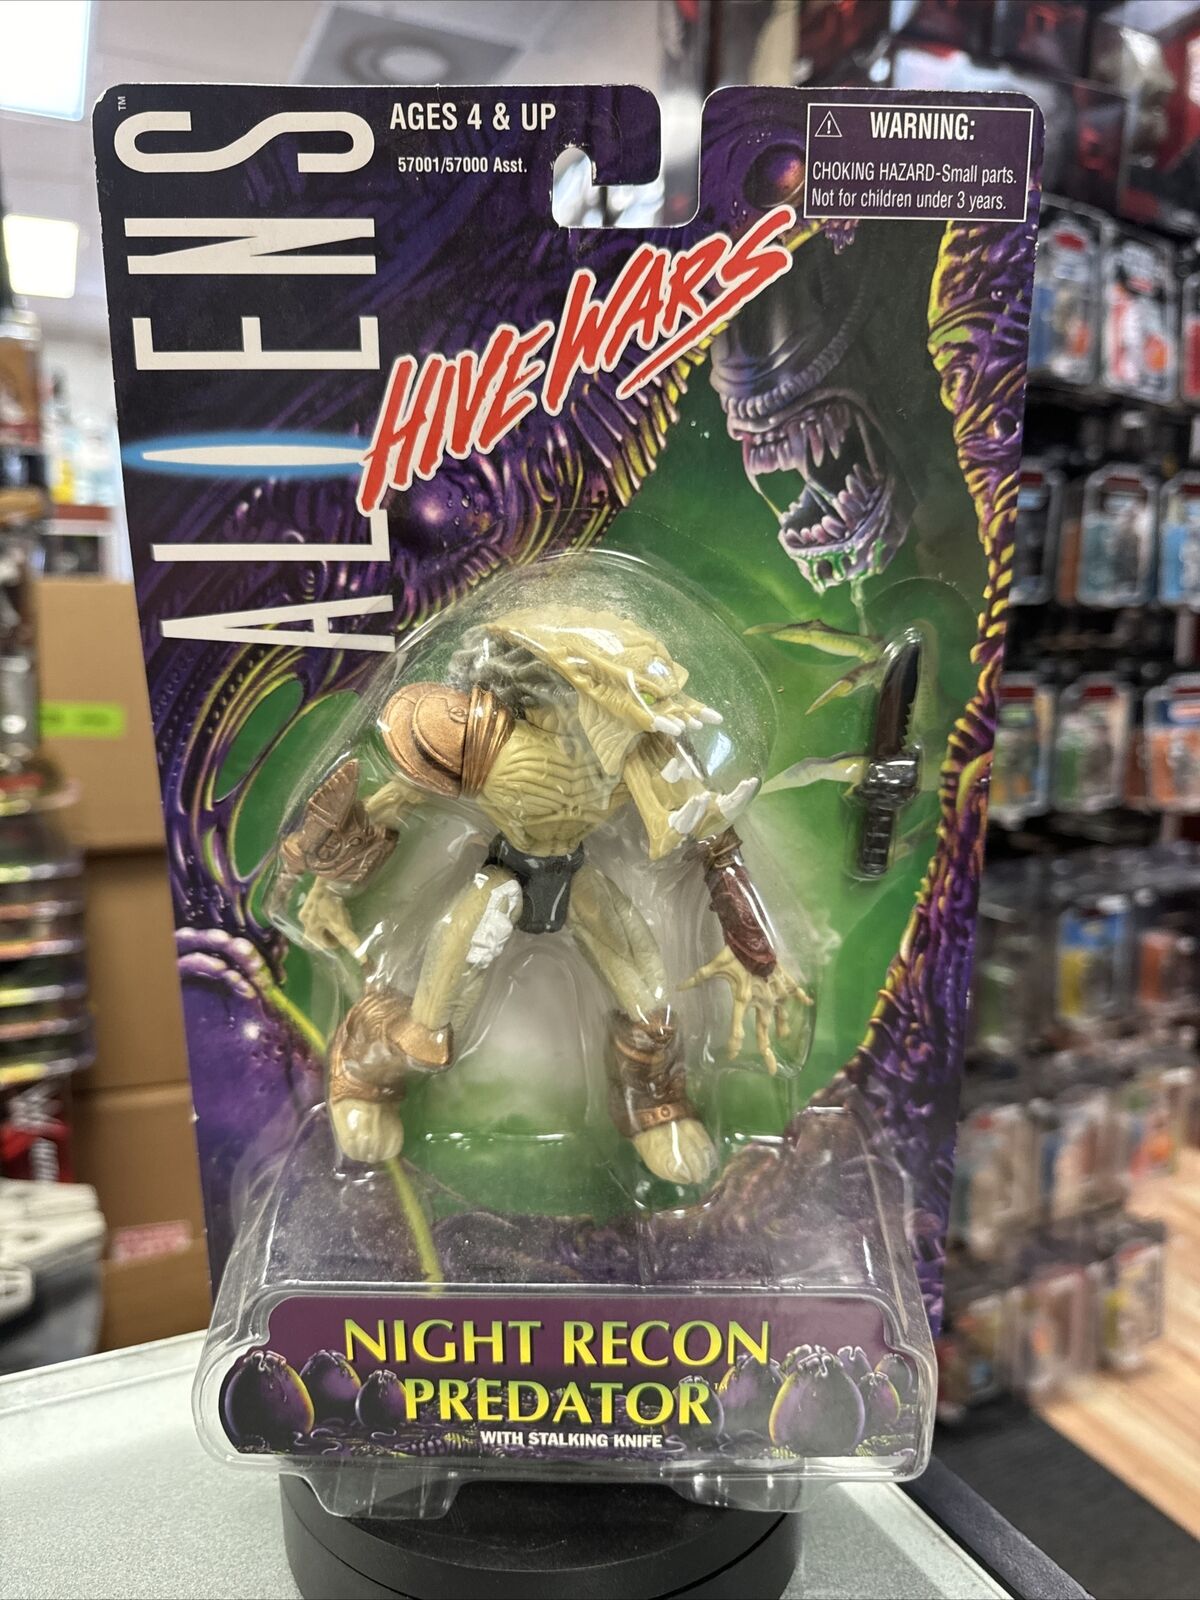 Night Recon Predator Hive Wars (Vintage Aliens Predator, Kenner) Sealed